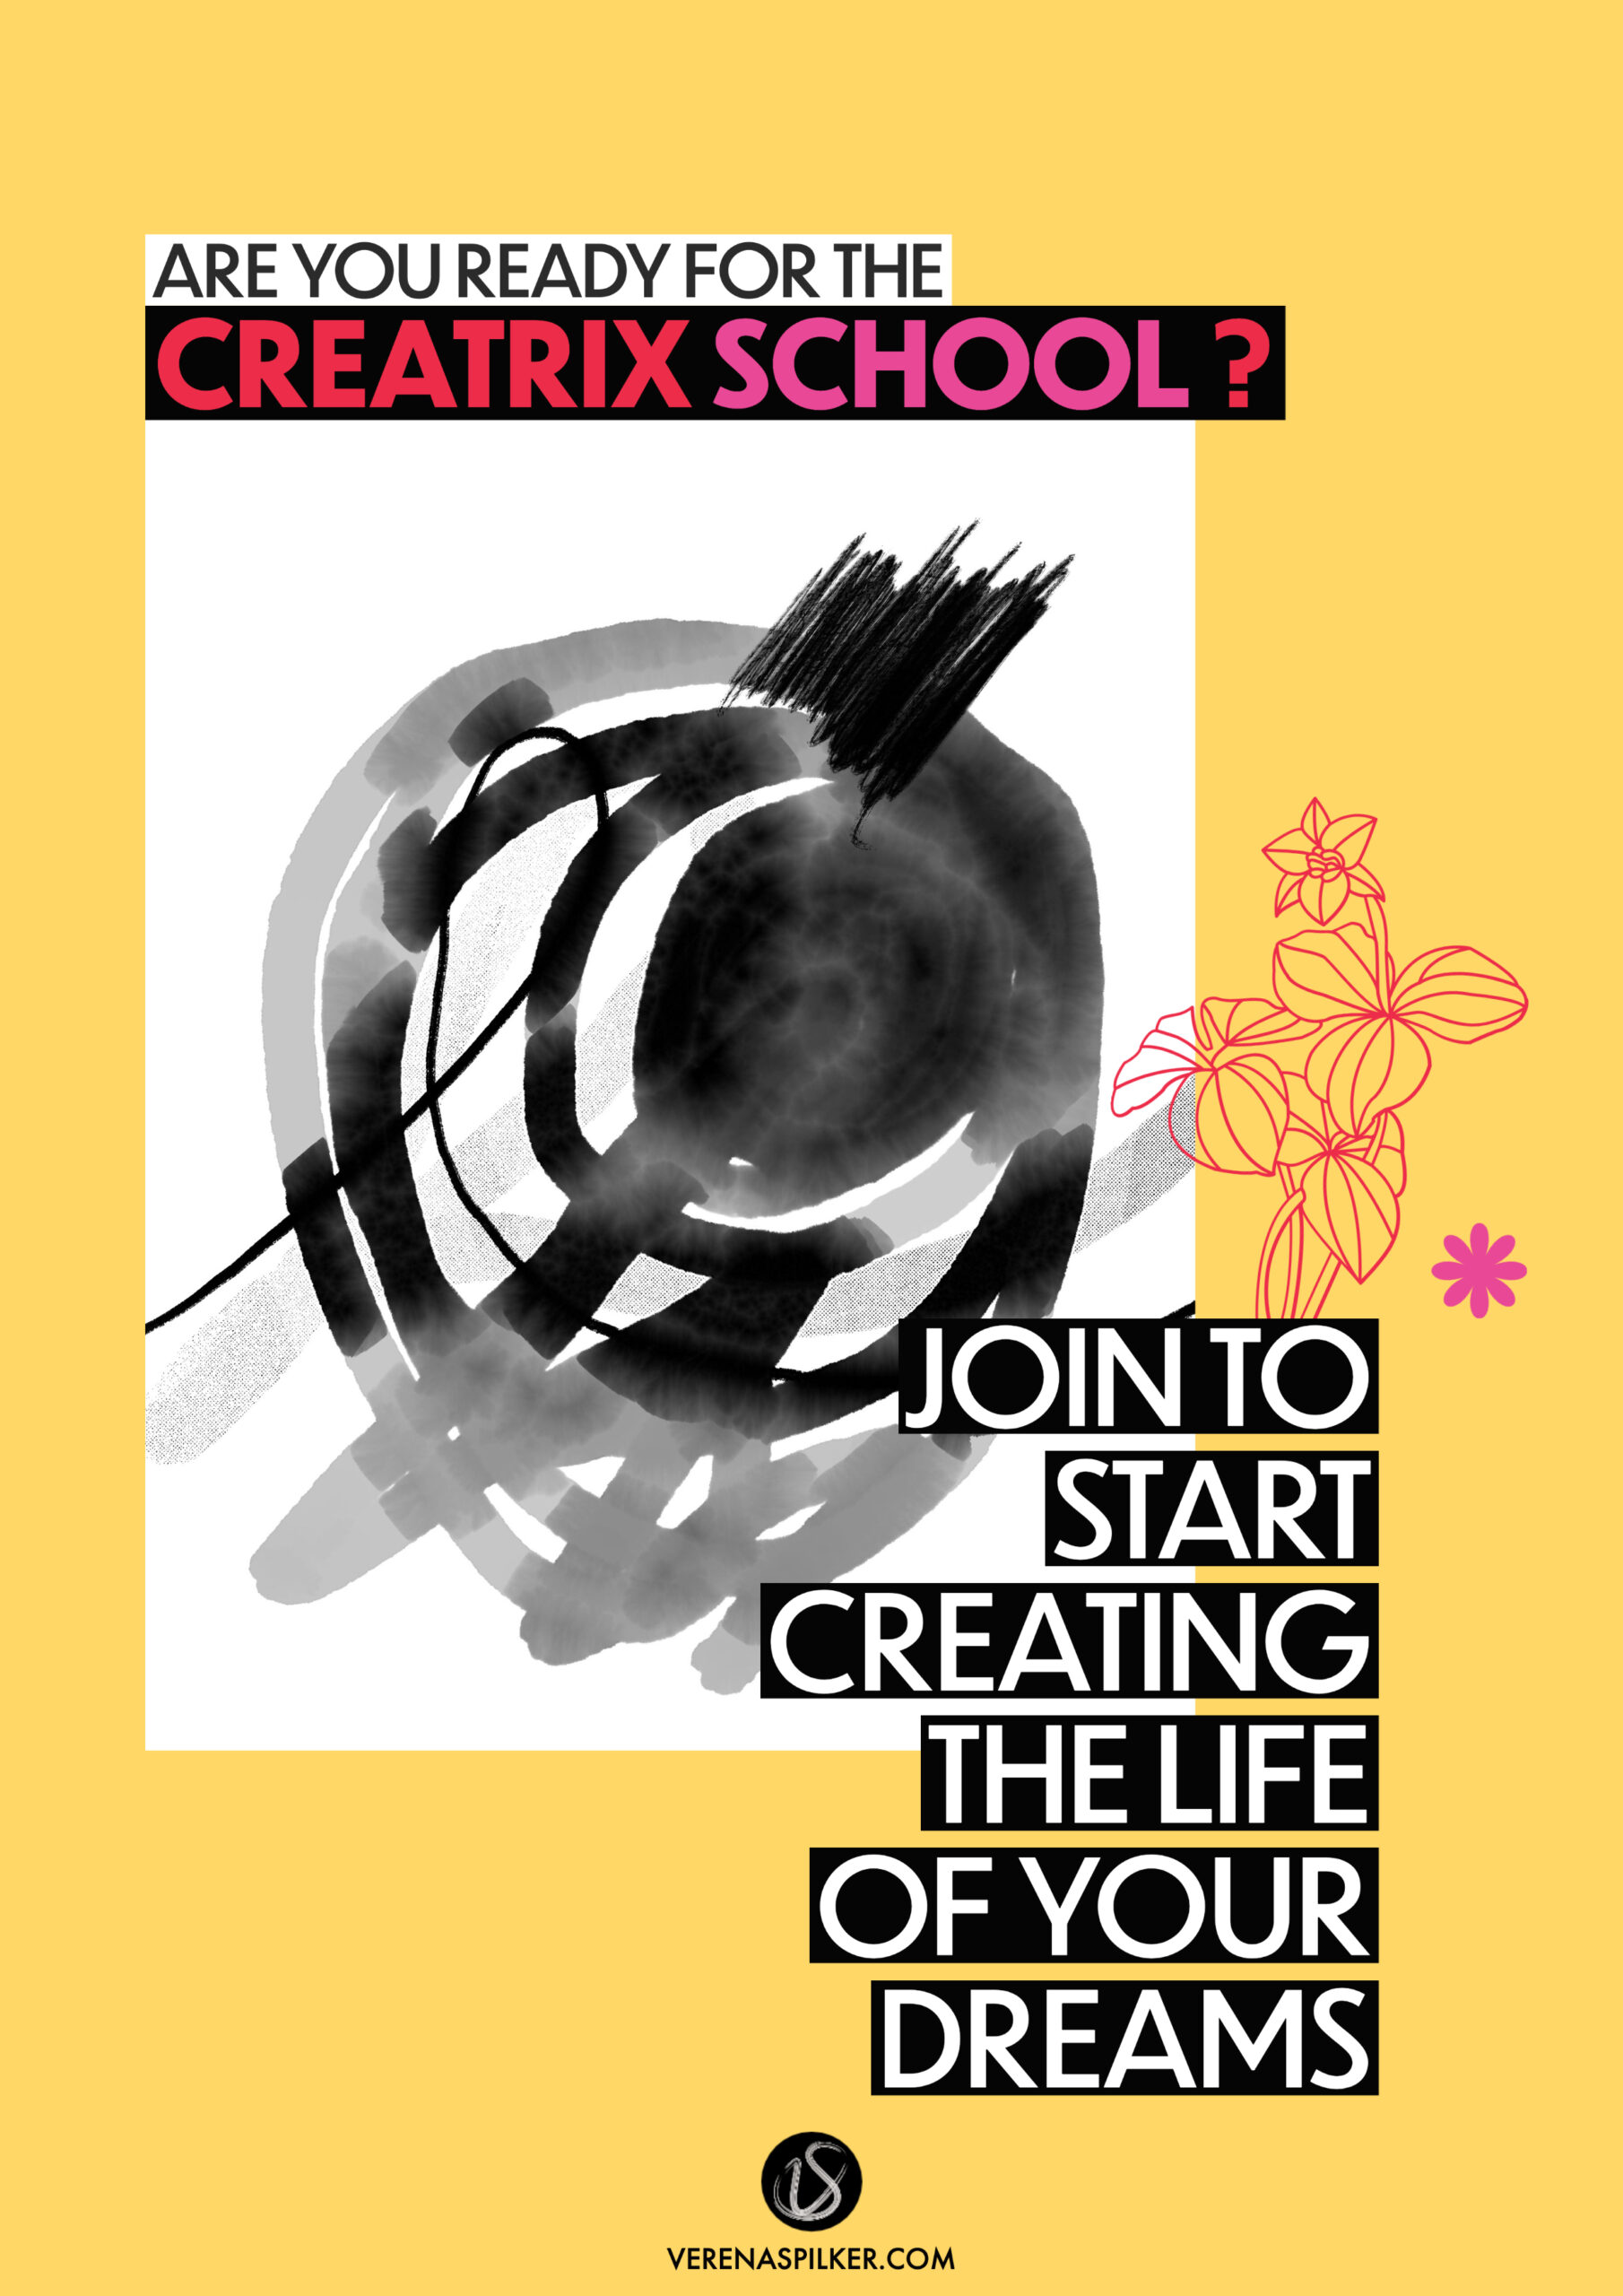 I AM CREATOR School - Start Creating Your New Life